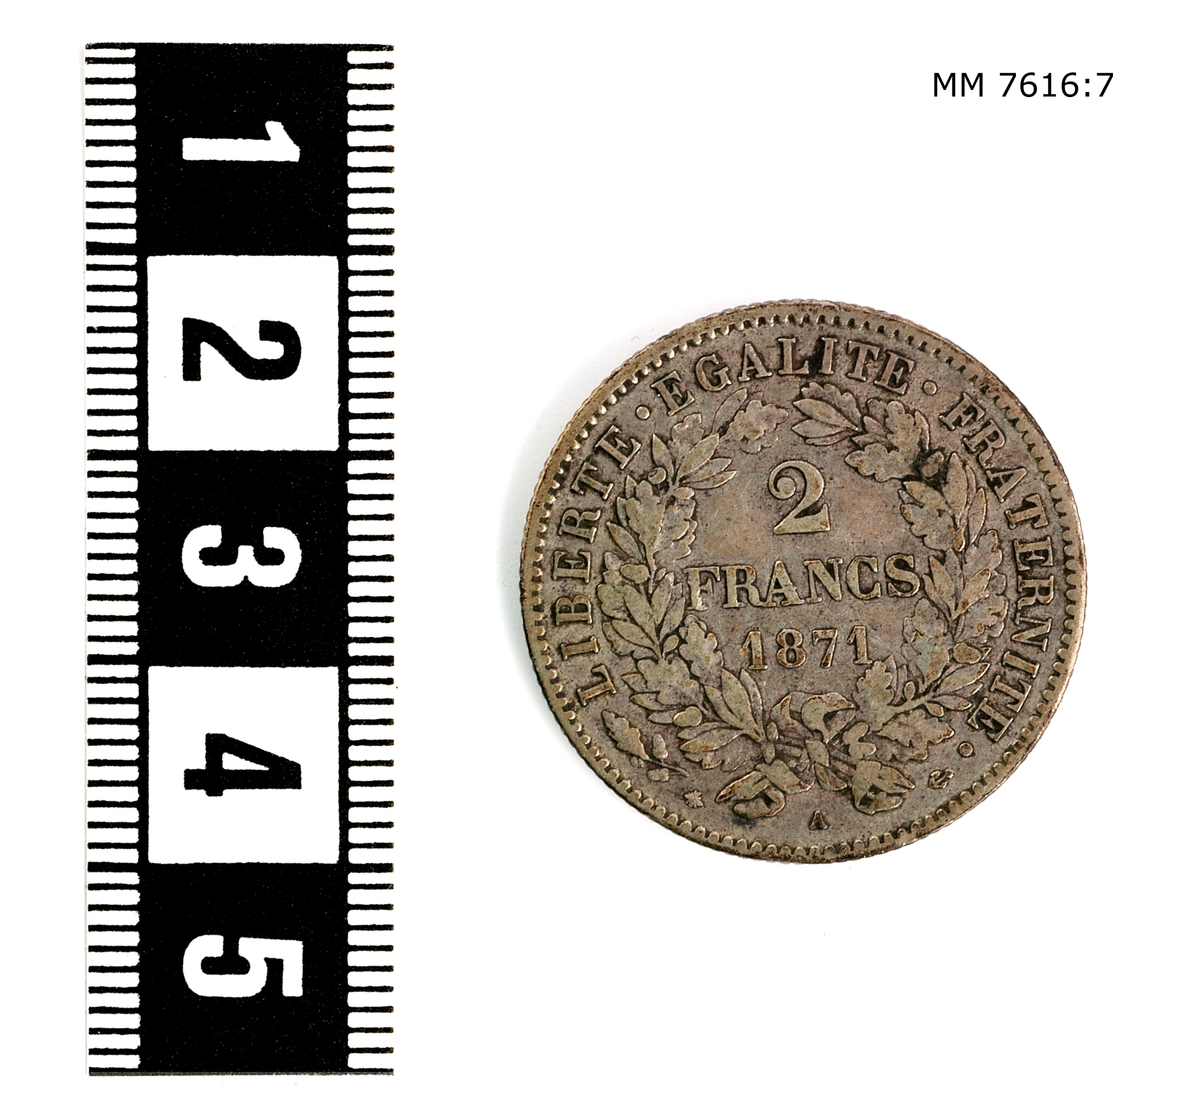 Mynt av silver. 2 francs Frankrike. Präglad på ena sidan: "Republique Francaise" samt figur med krans, på andra sidan: "2 francs 1871 Liberte Egalite Fraternite".